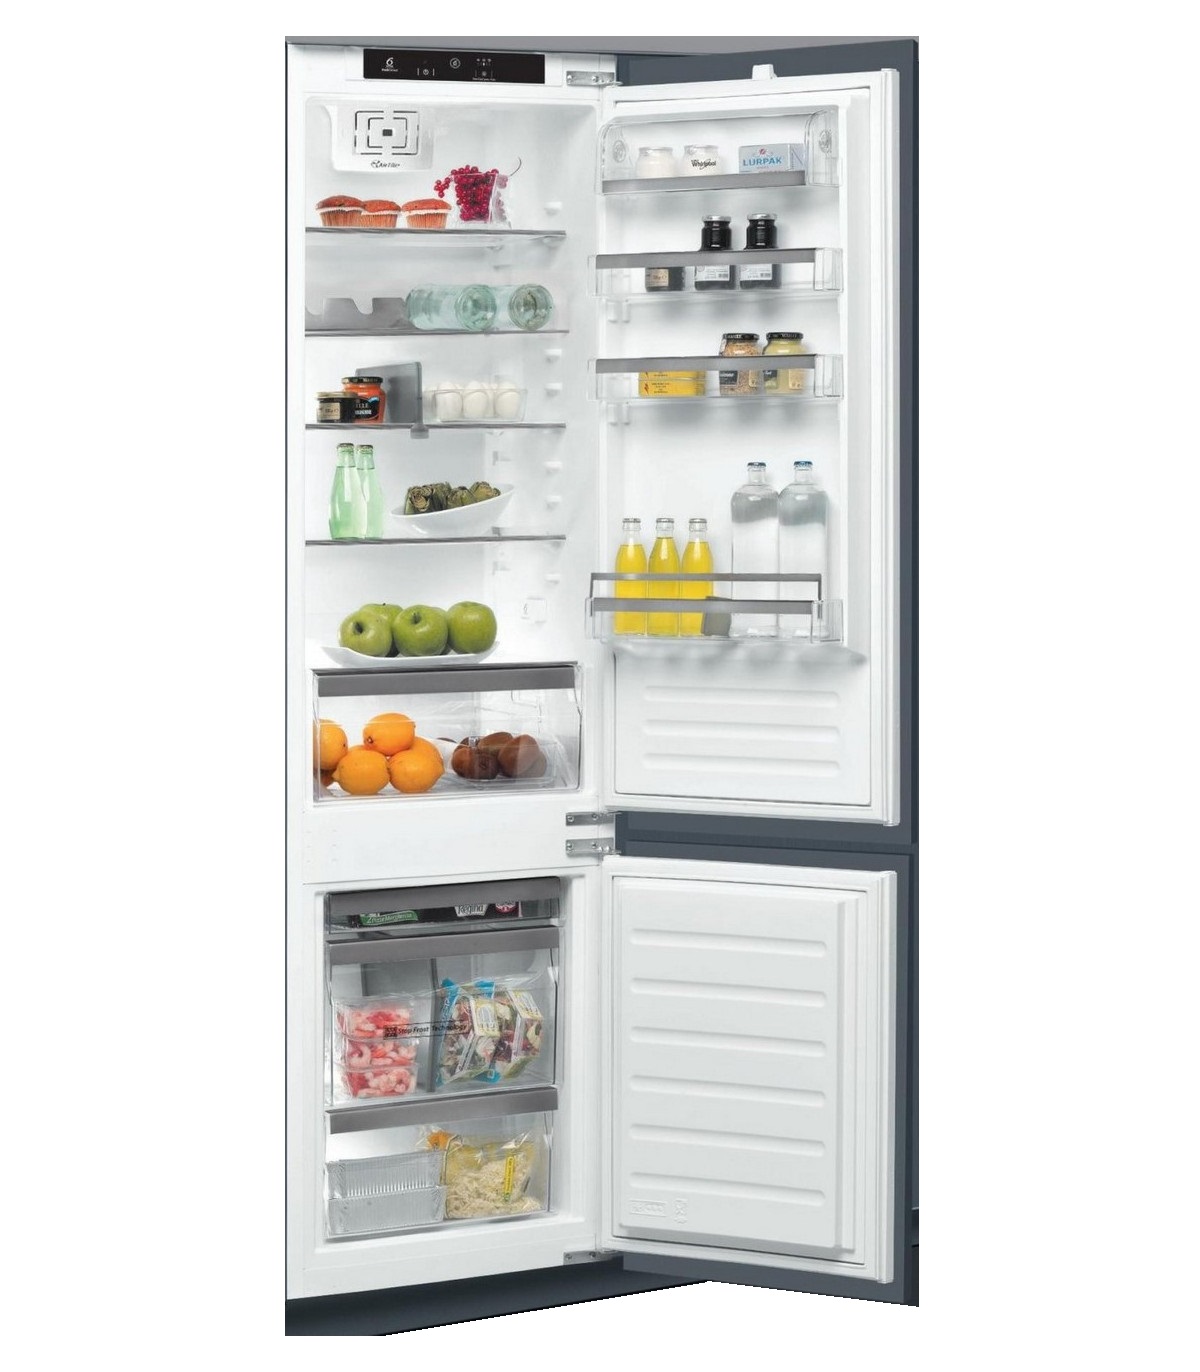 Встраиваемый холодильник Whirlpool ART 9811 SF2 серебристый встраиваемый холодильник whirlpool art 9811 sf2